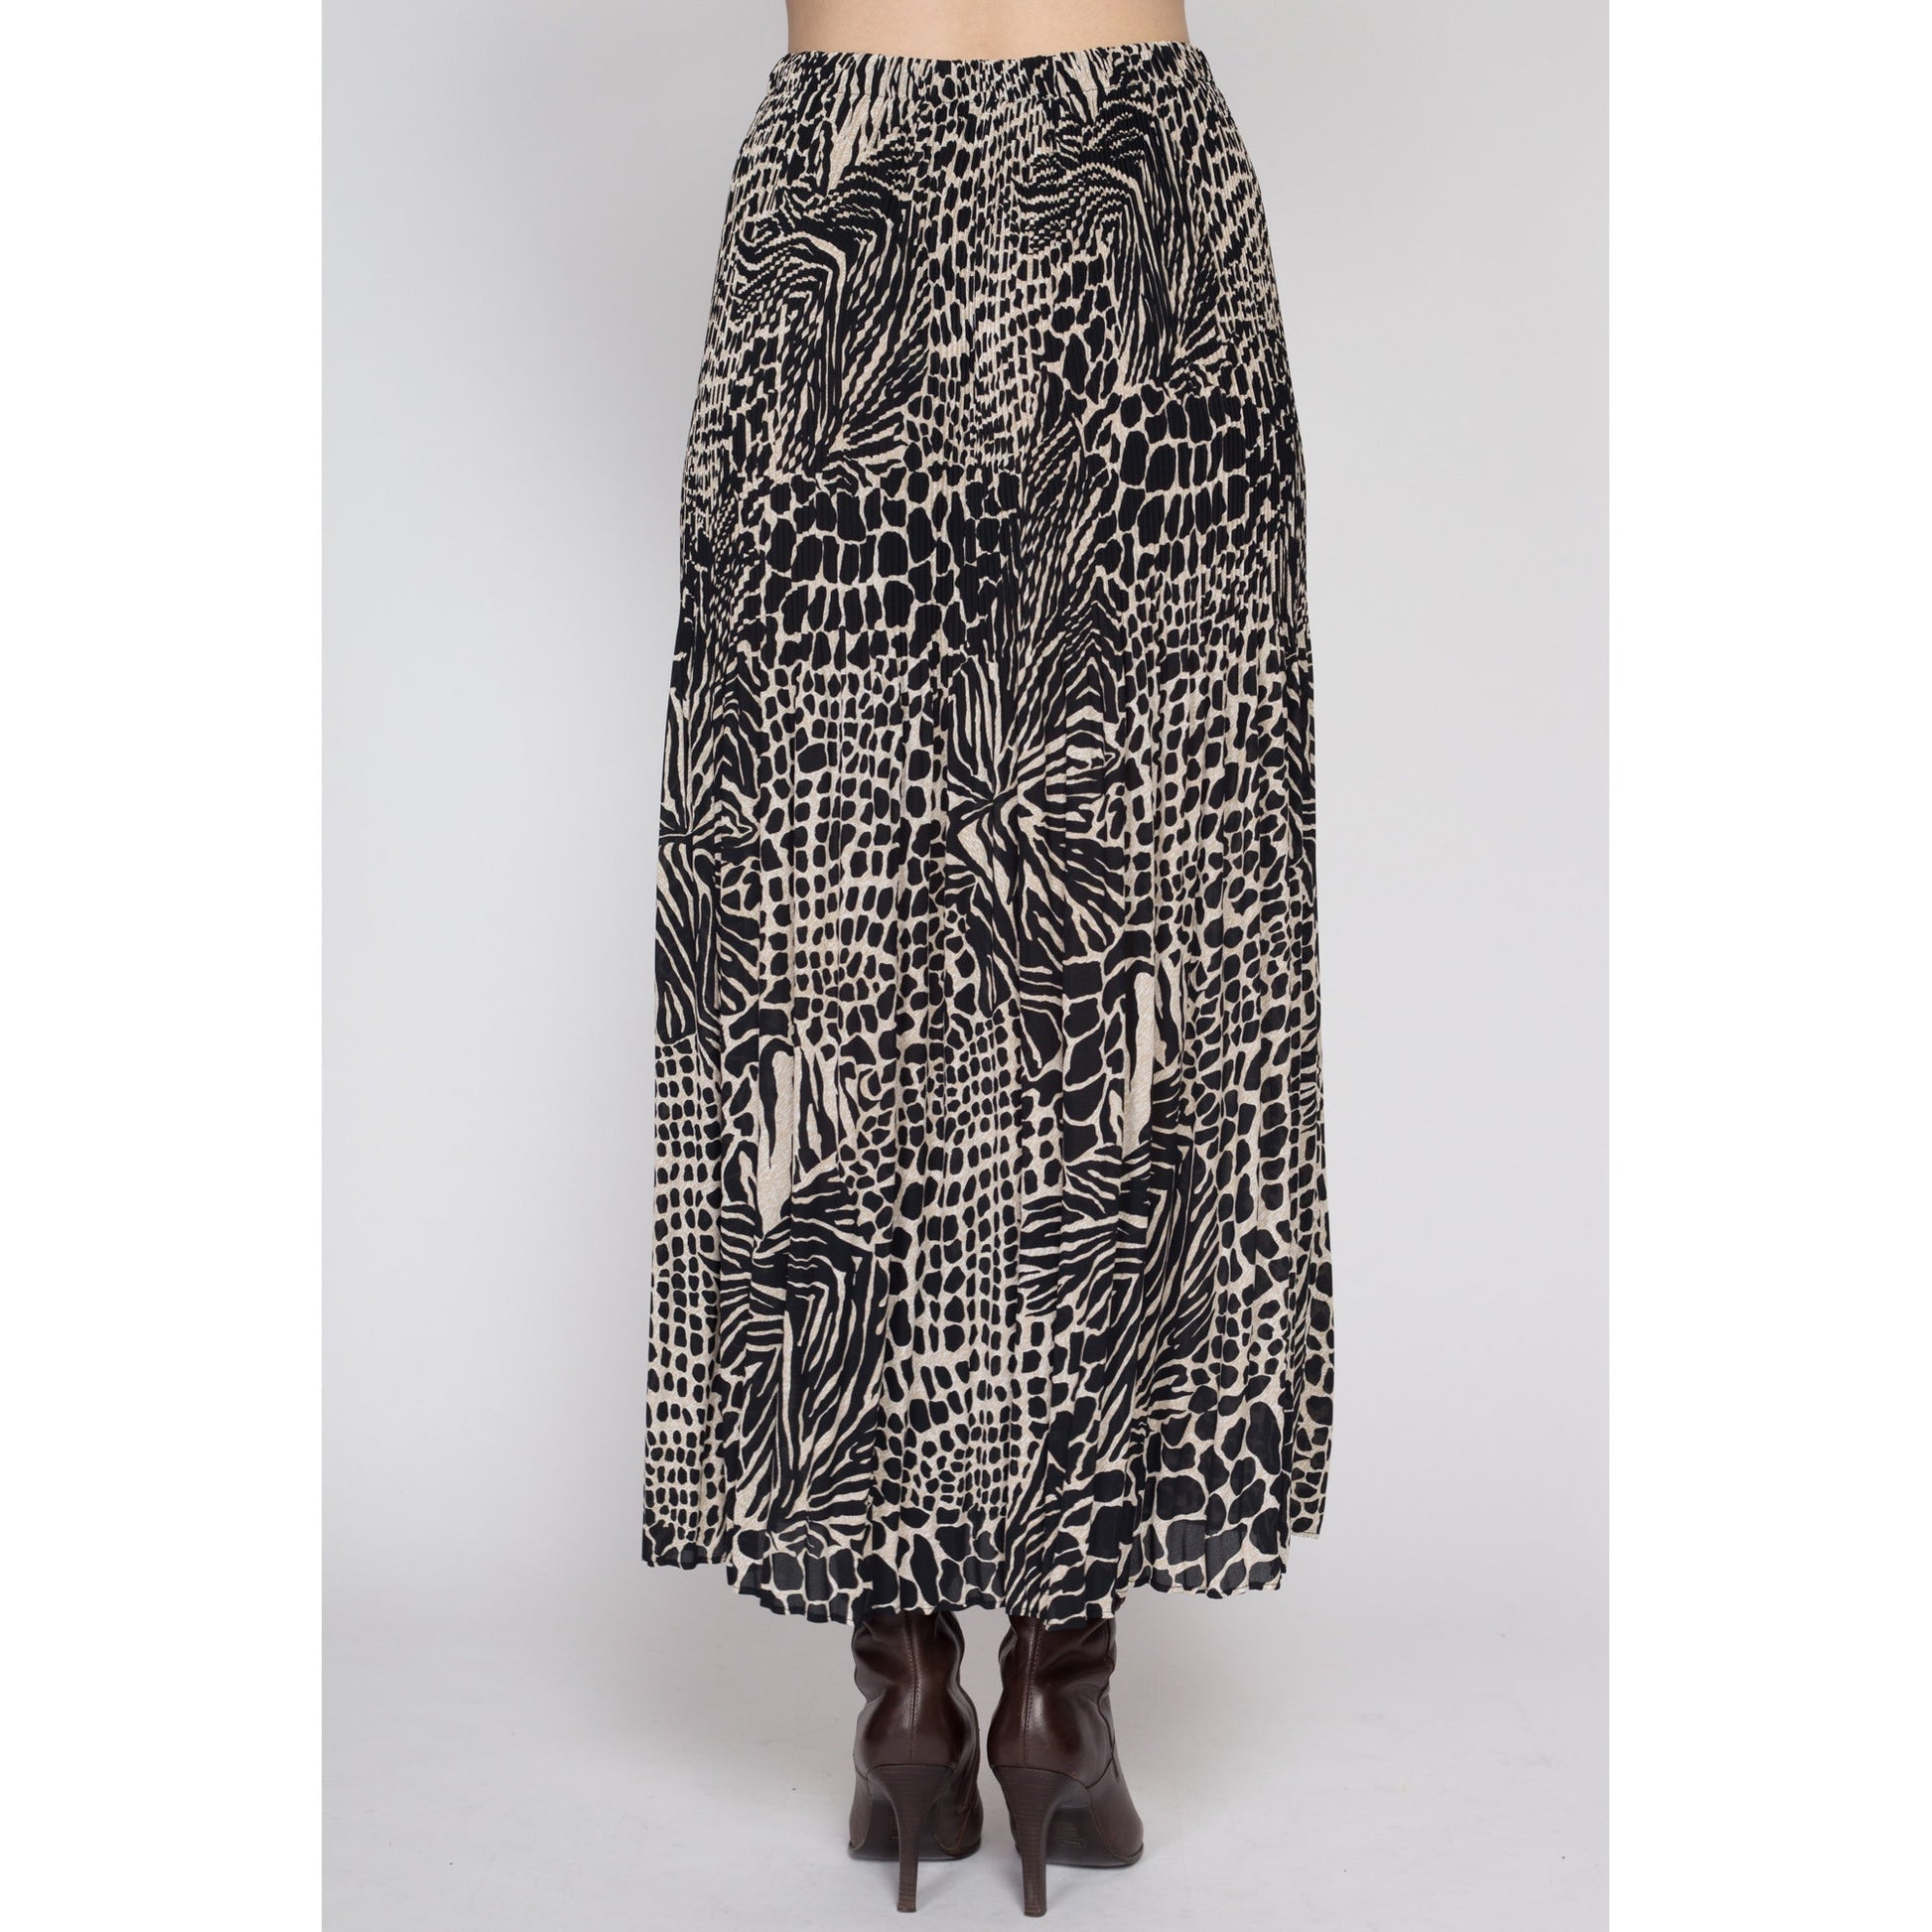 Medium 90s Animal Print Pleated Maxi Skirt | Vintage Boho Black & White High Waisted Flowy Skirt